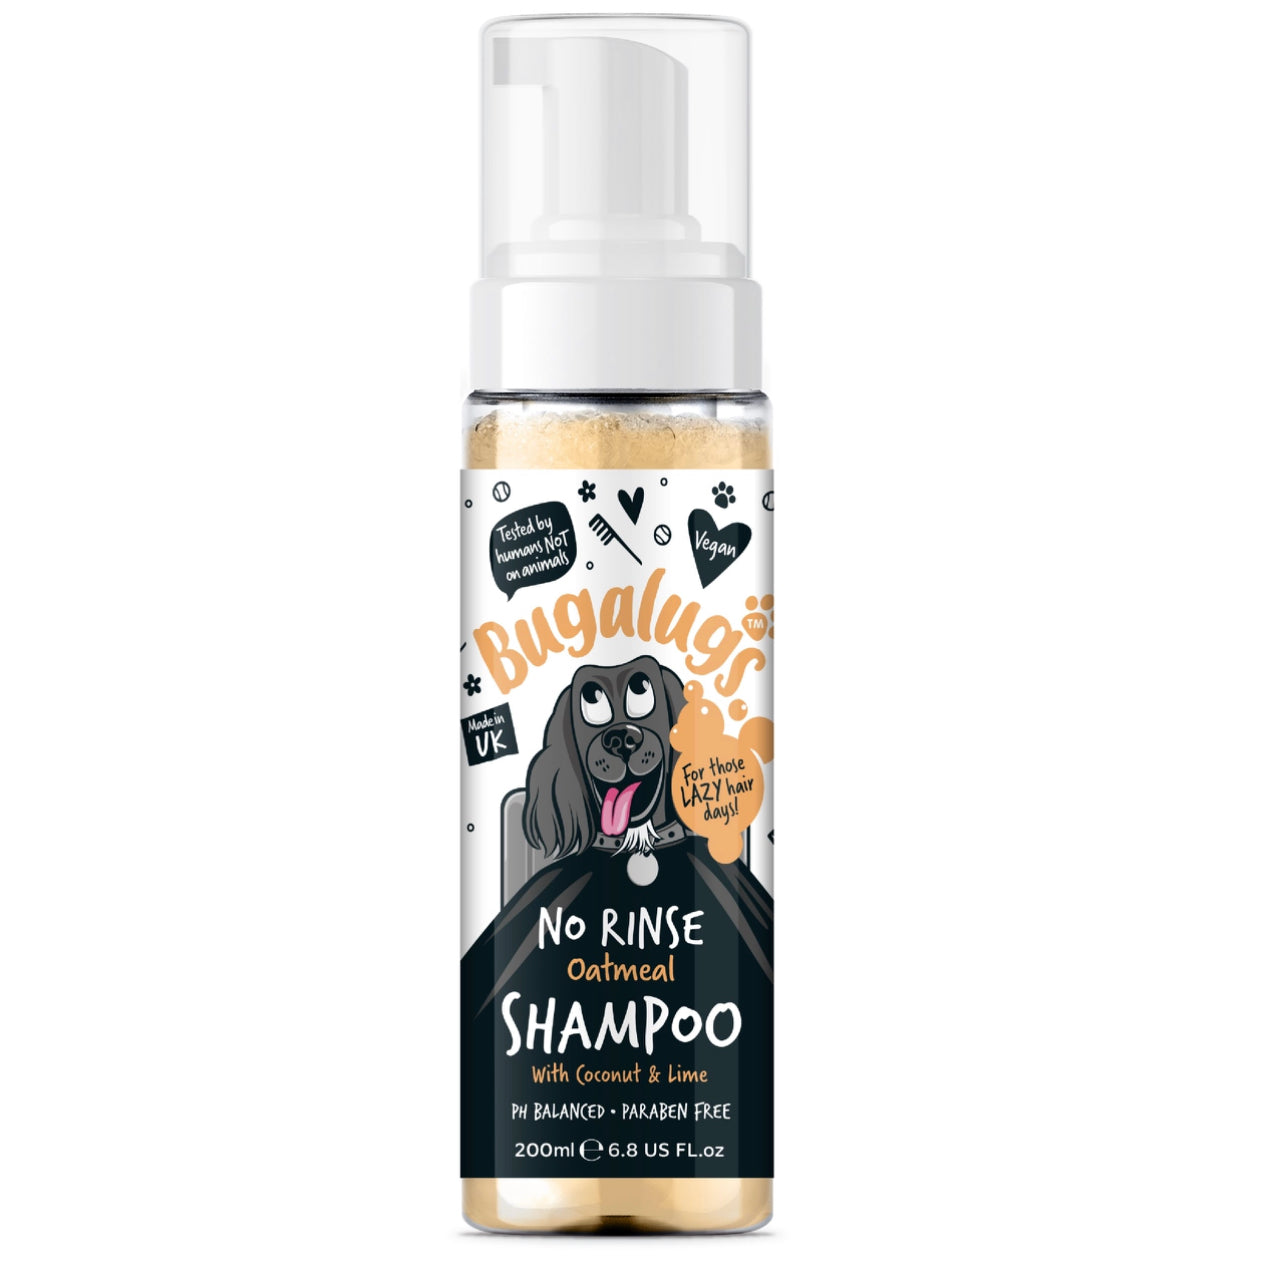 Bugalugs - No Rinse Oatmeal Shampoo